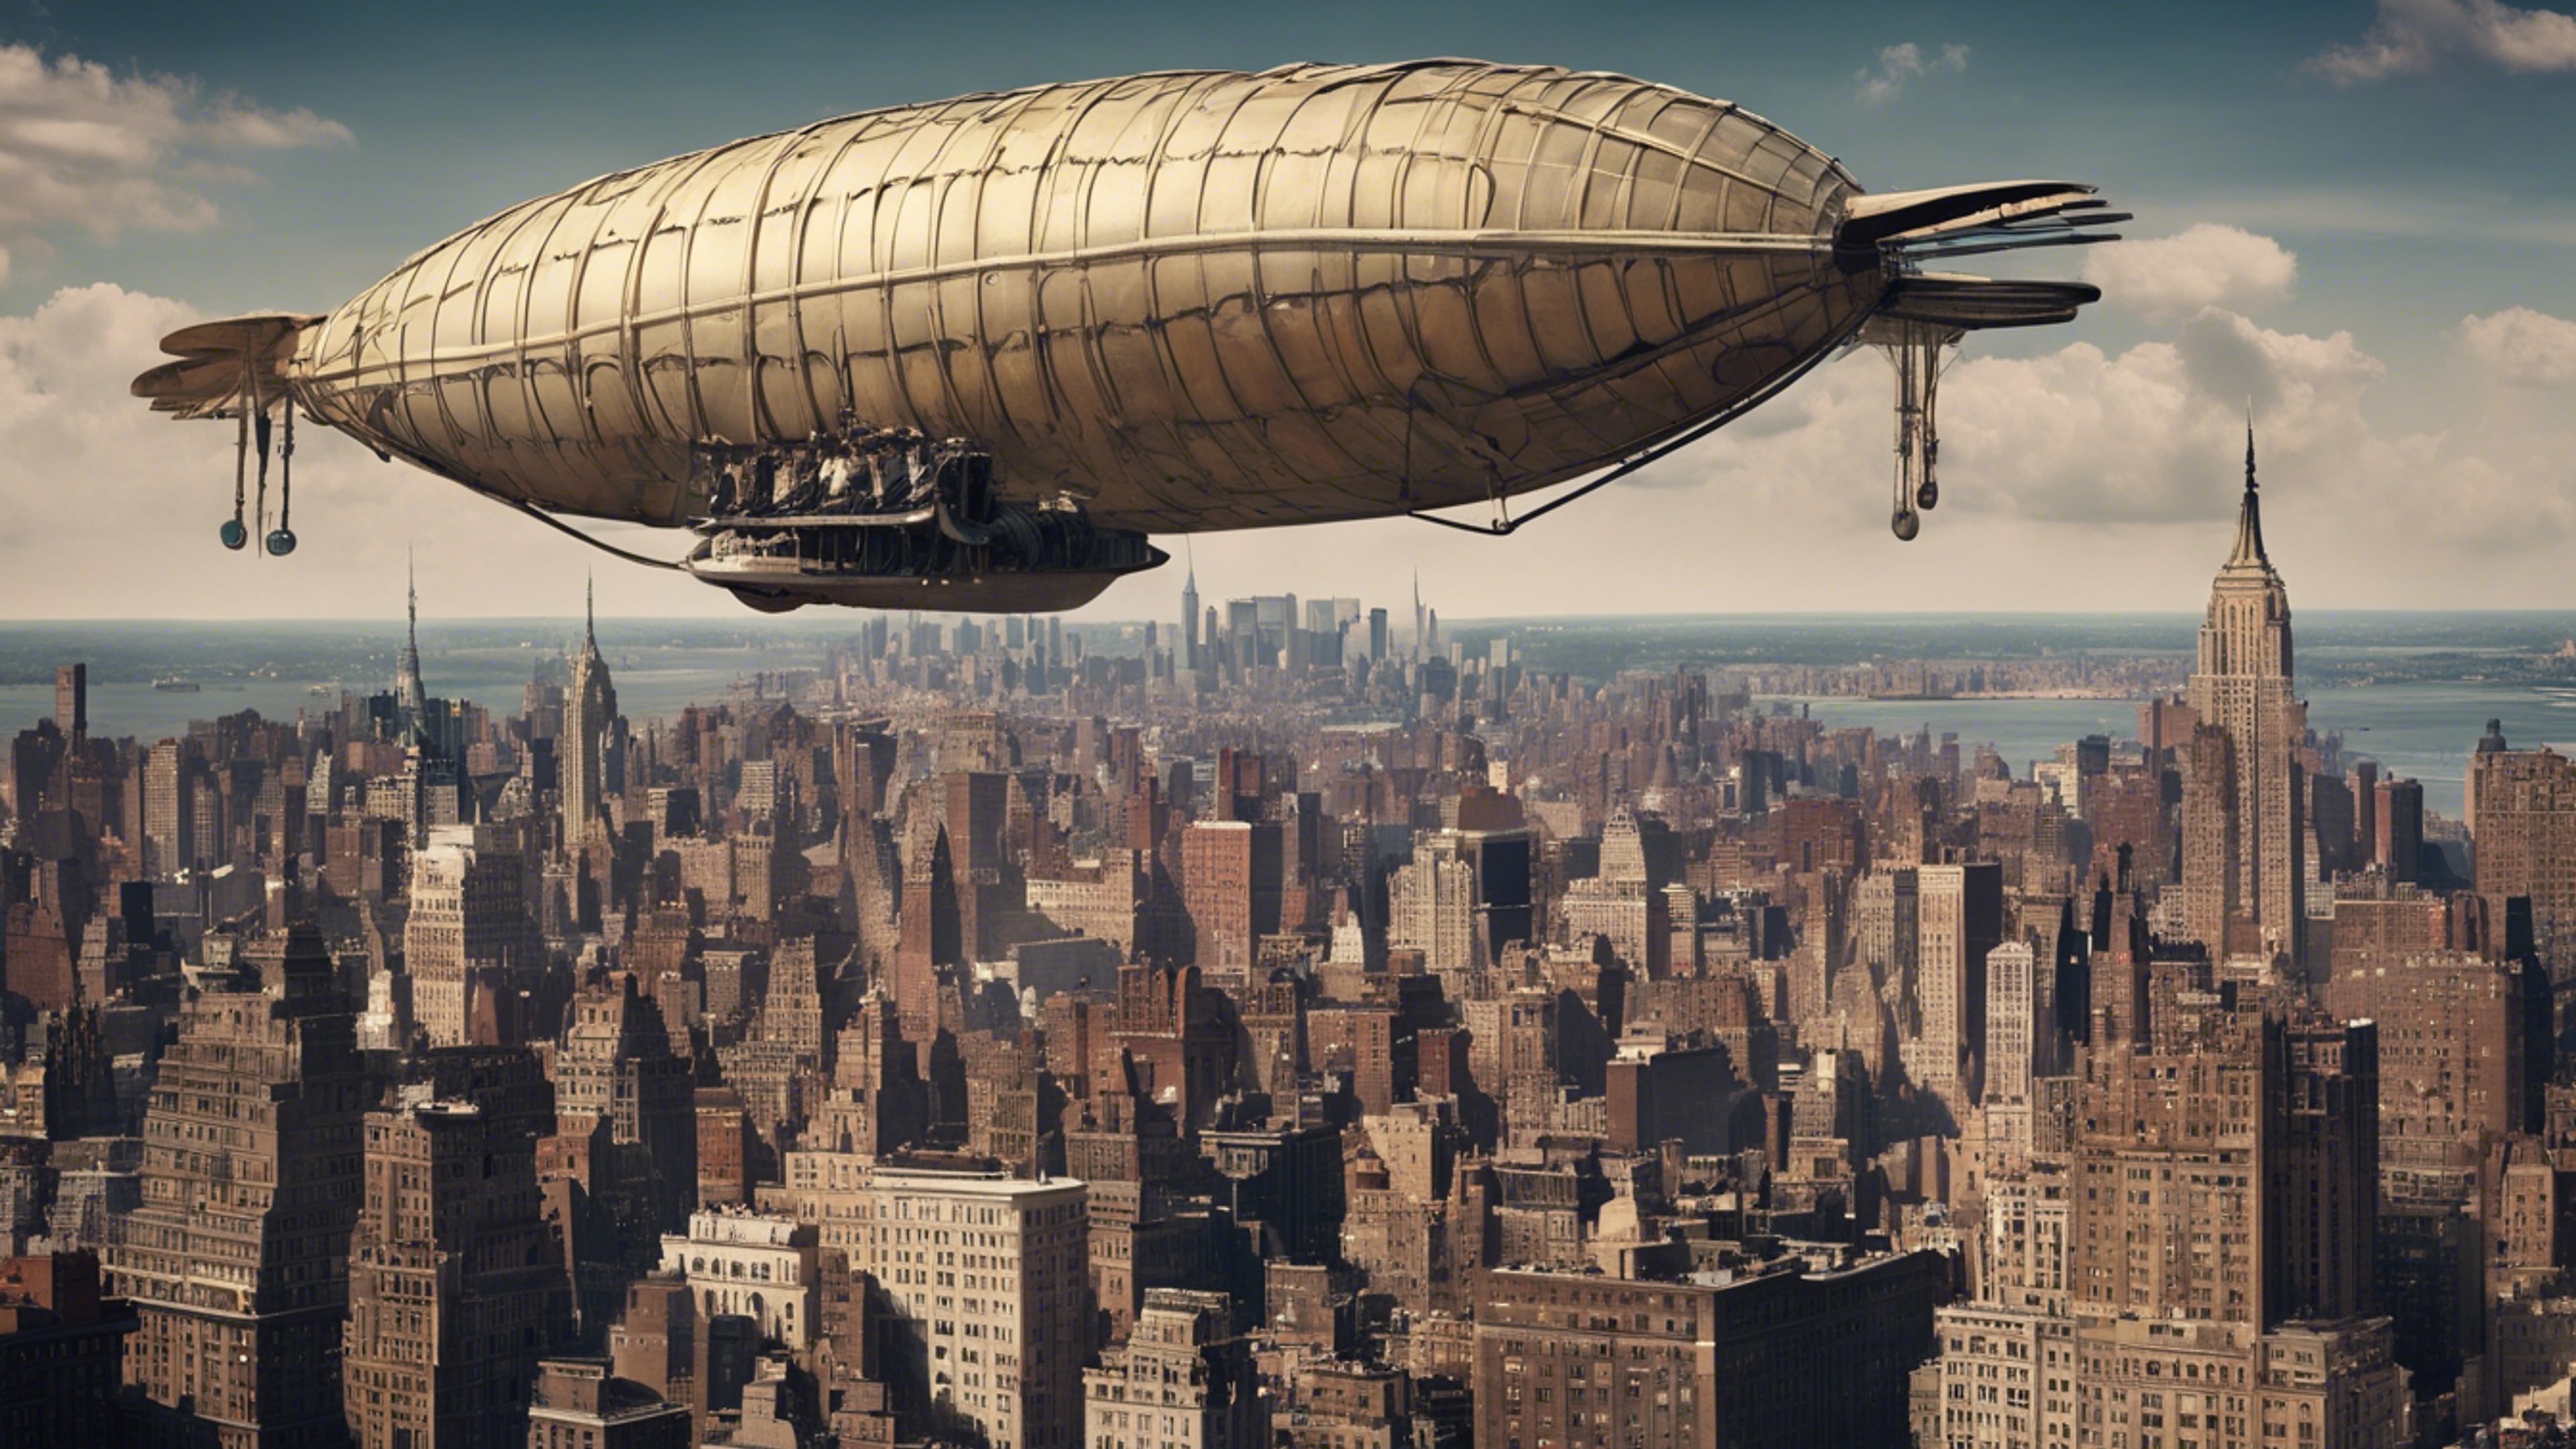 A nostalgic skyline view of 1920s New York City, peppered with zeppelins. Sfondo[5c42609b28fb4c129601]